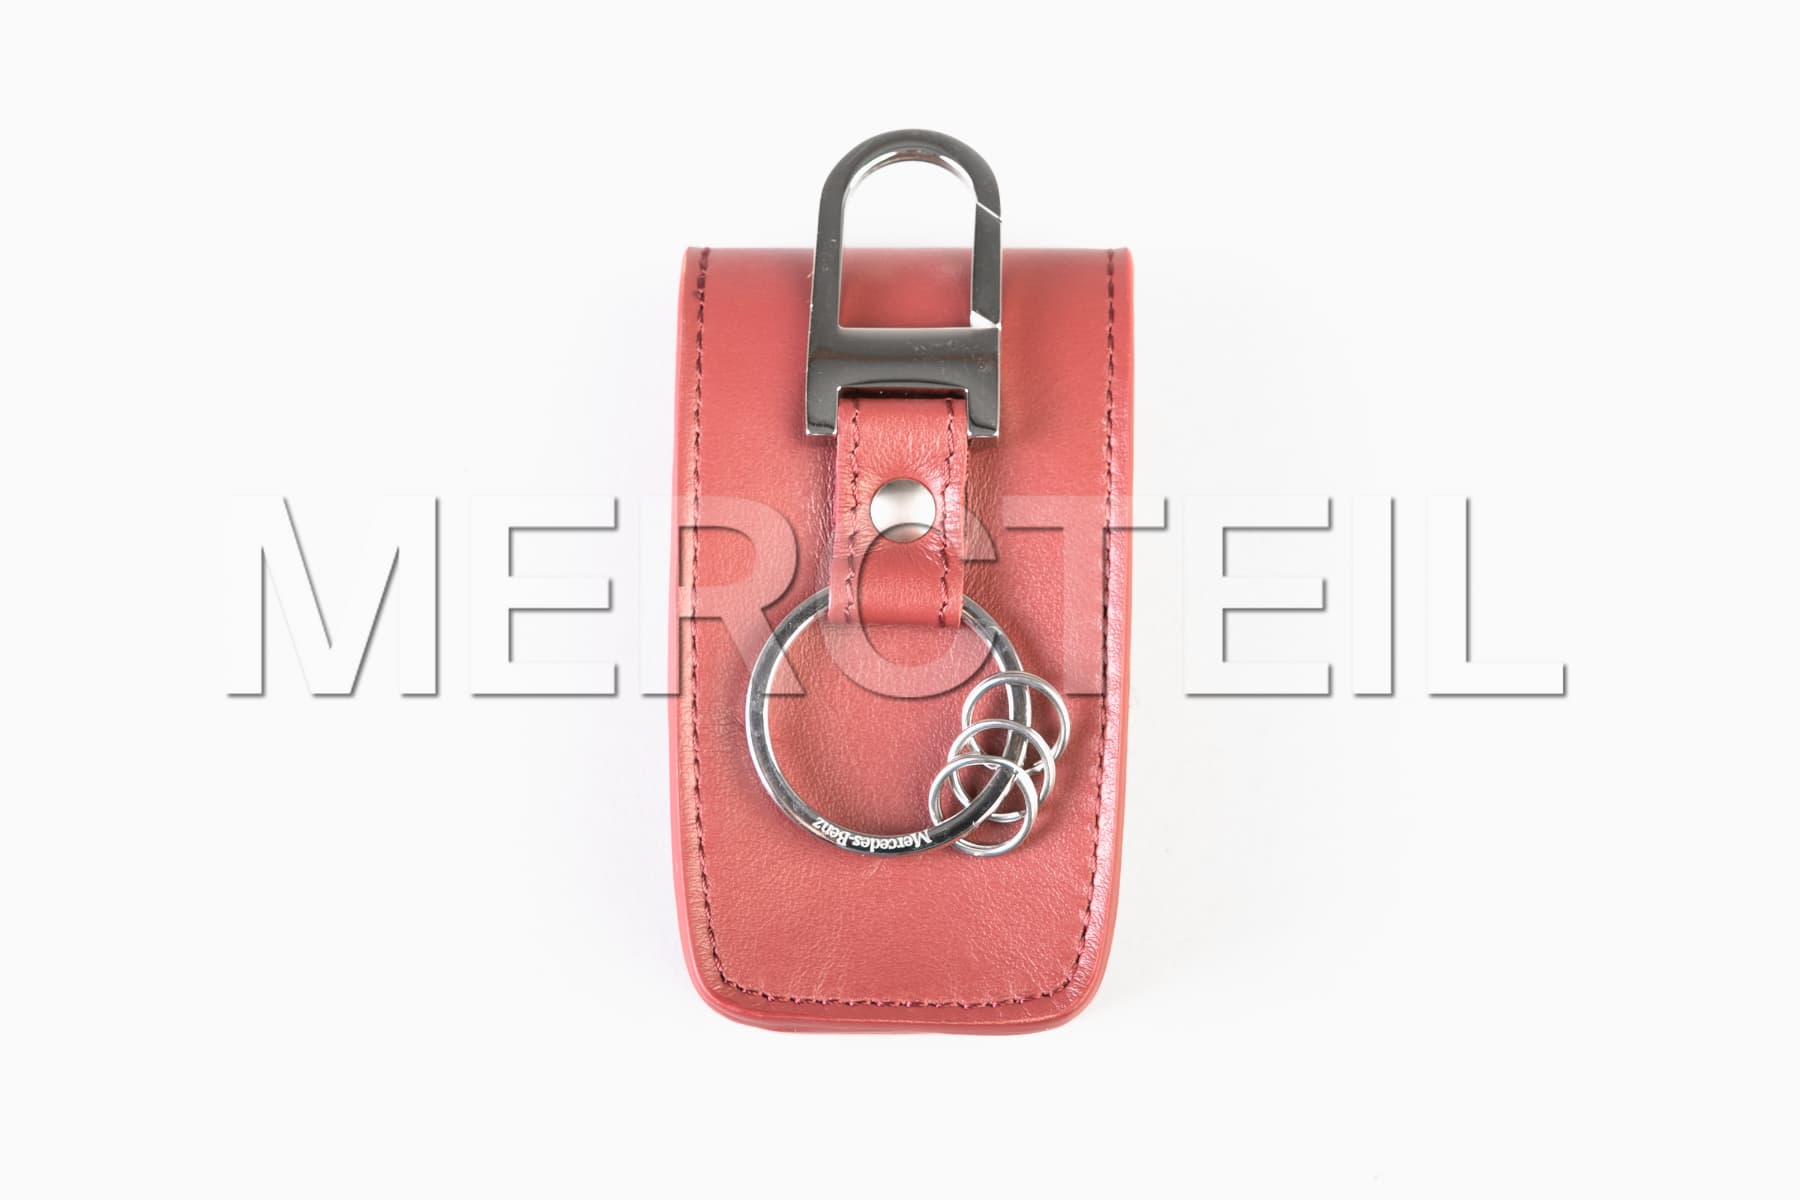 Schlüsseletui Leder Rot 6. Generation Original Mercedes-Benz Collection (Teilenummer: B66959265)